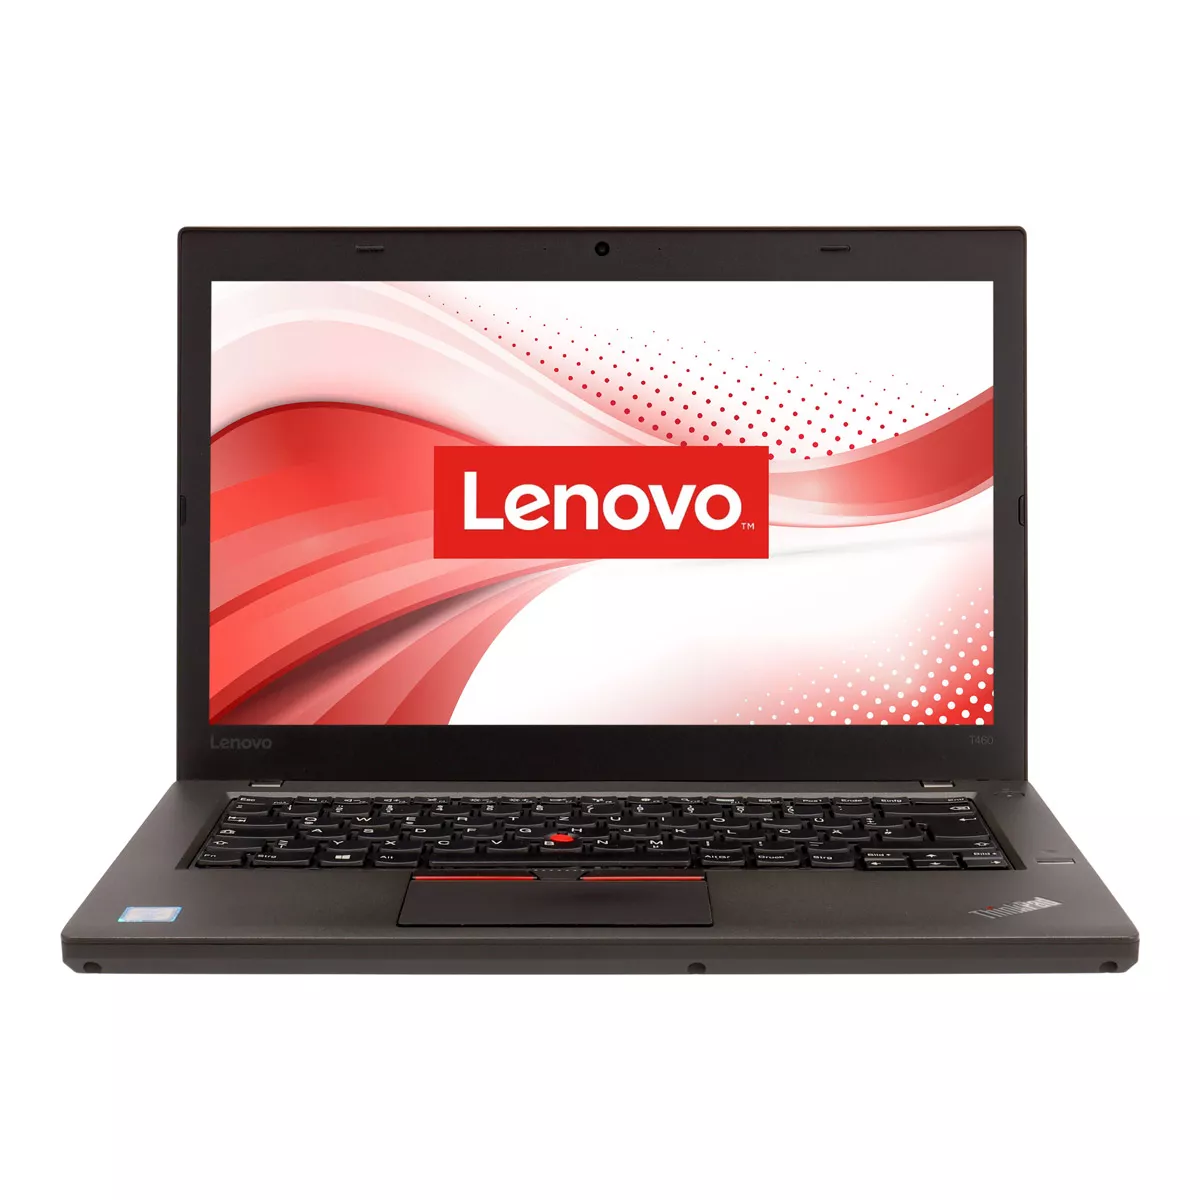 Lenovo ThinkPad T480 Core i5 8350U Full-HD Touch 500 GB M.2 nVME SSD Webcam B